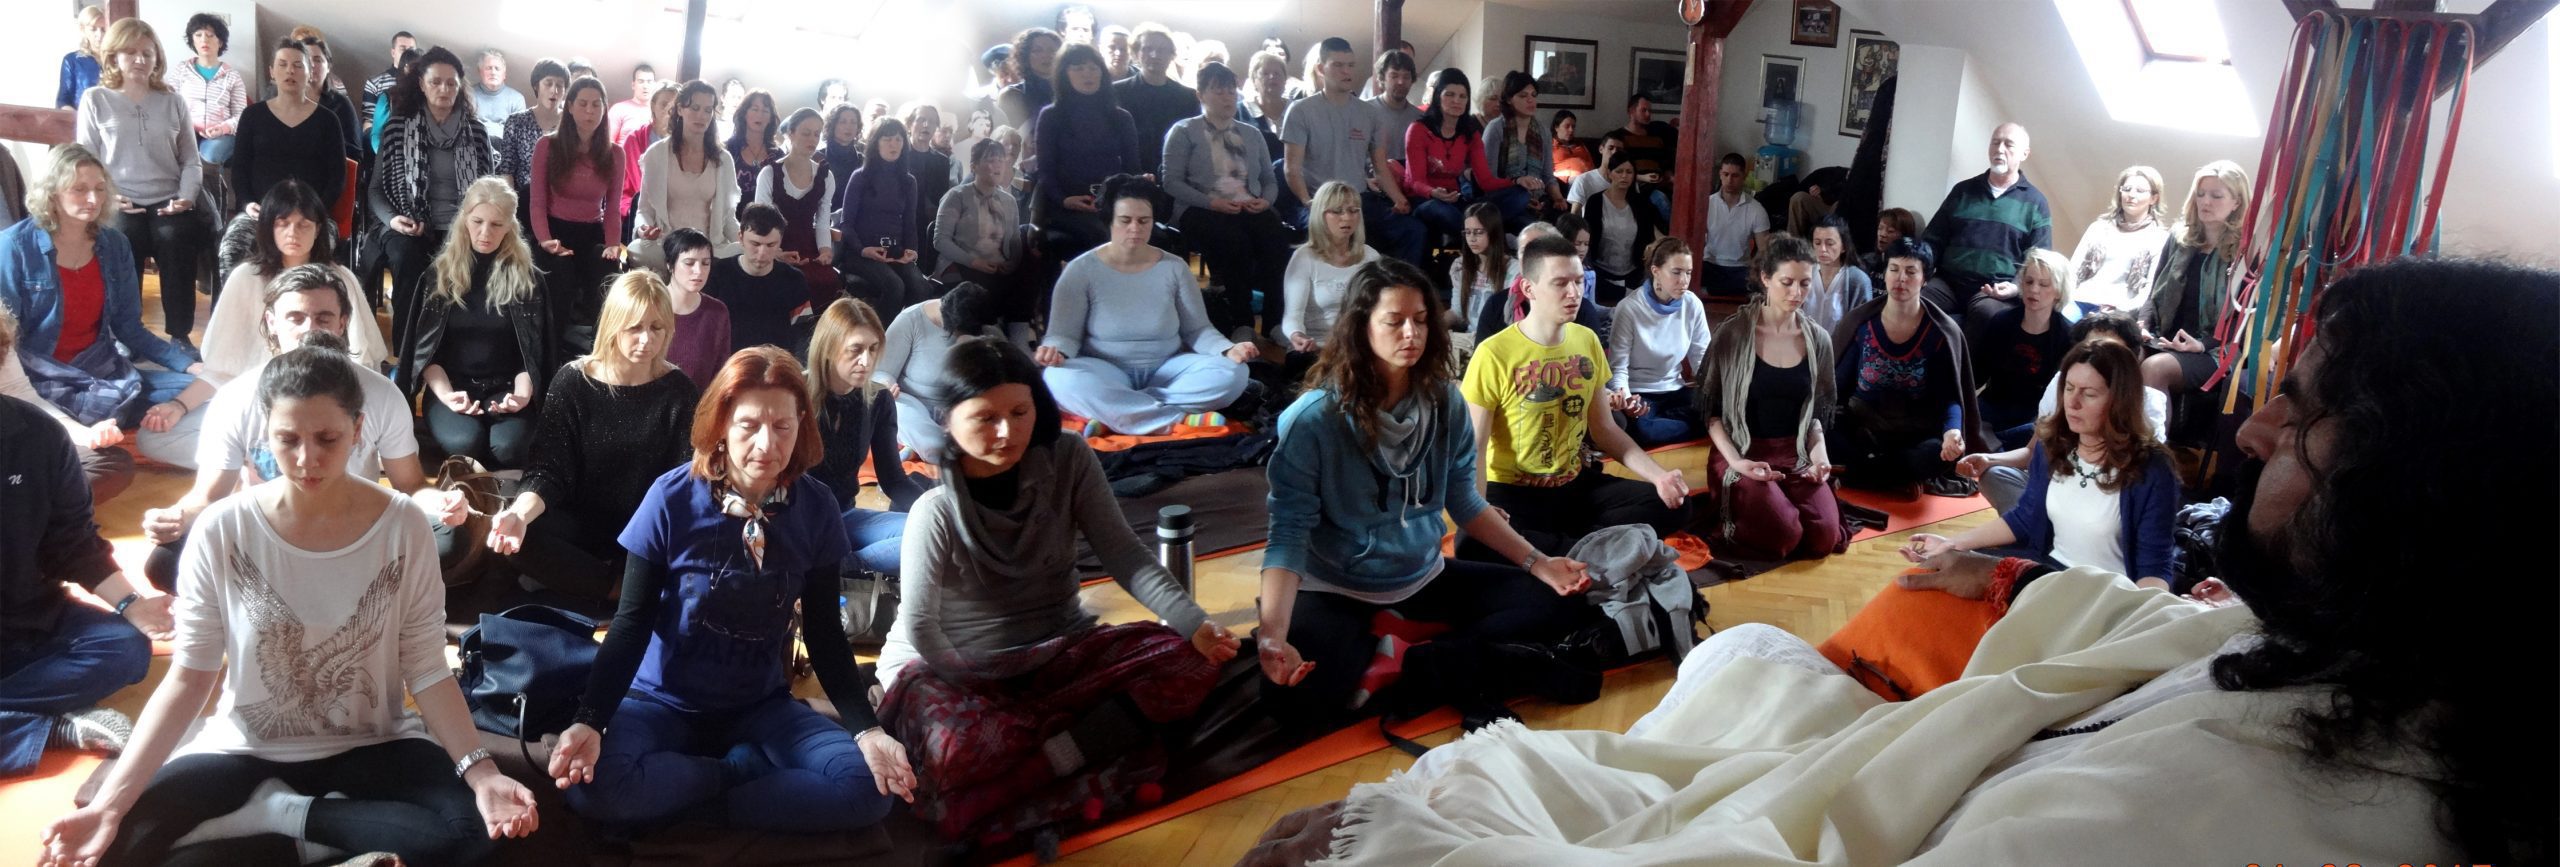 Satsang with Mohanji in Novi Sad, Serbia, 1st March 2015 - Meditation